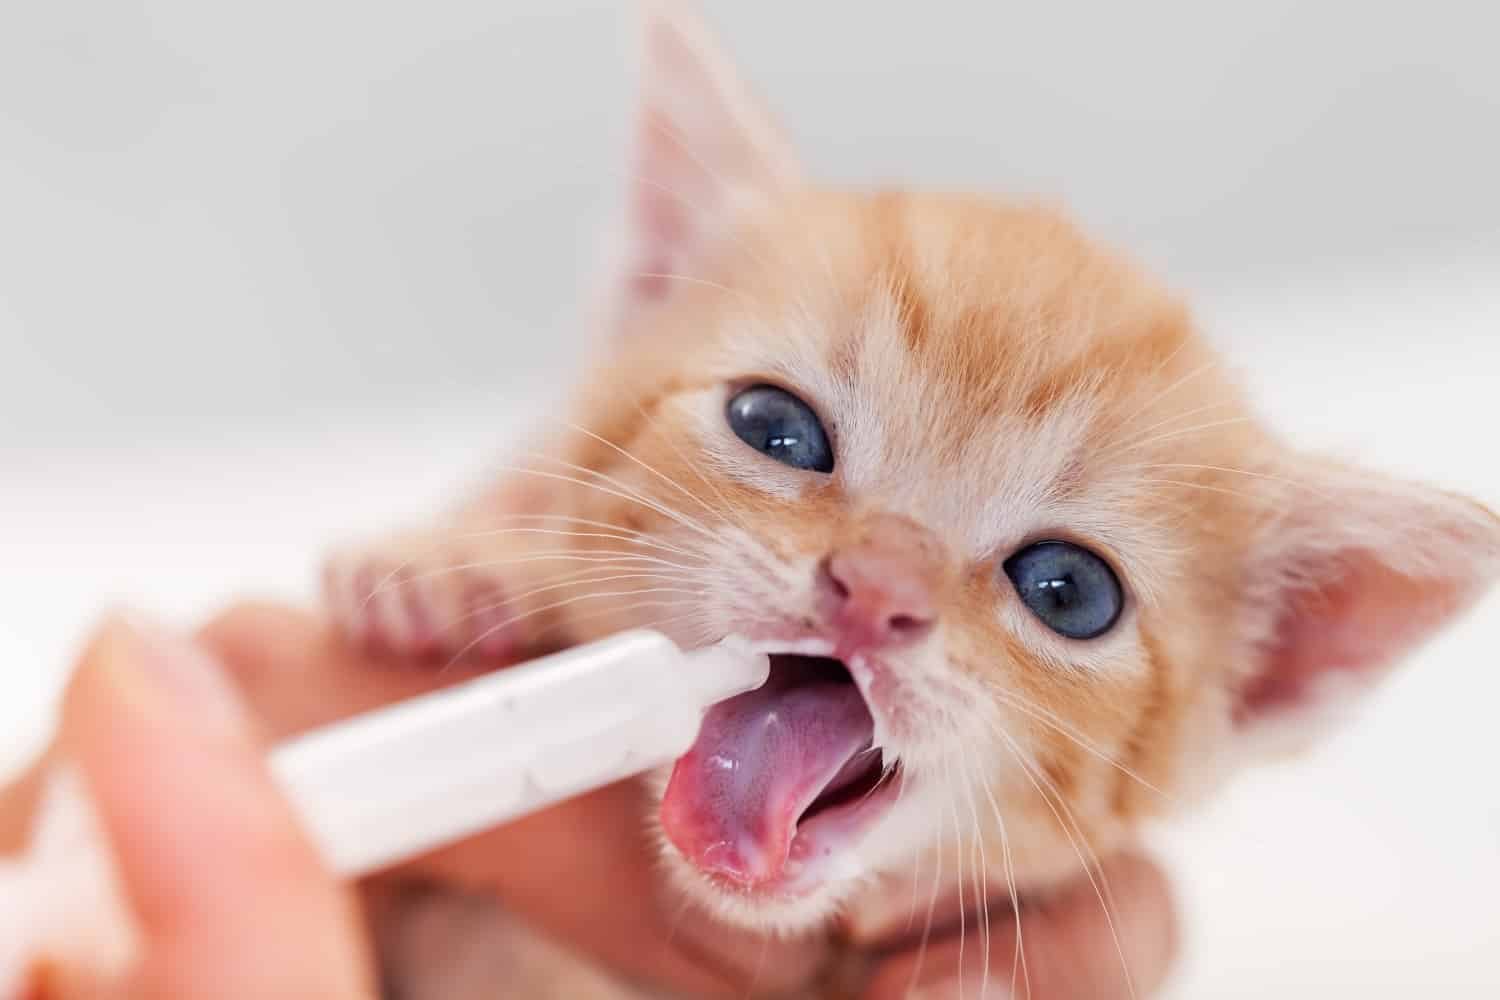 Syringe Feeding a Kitten